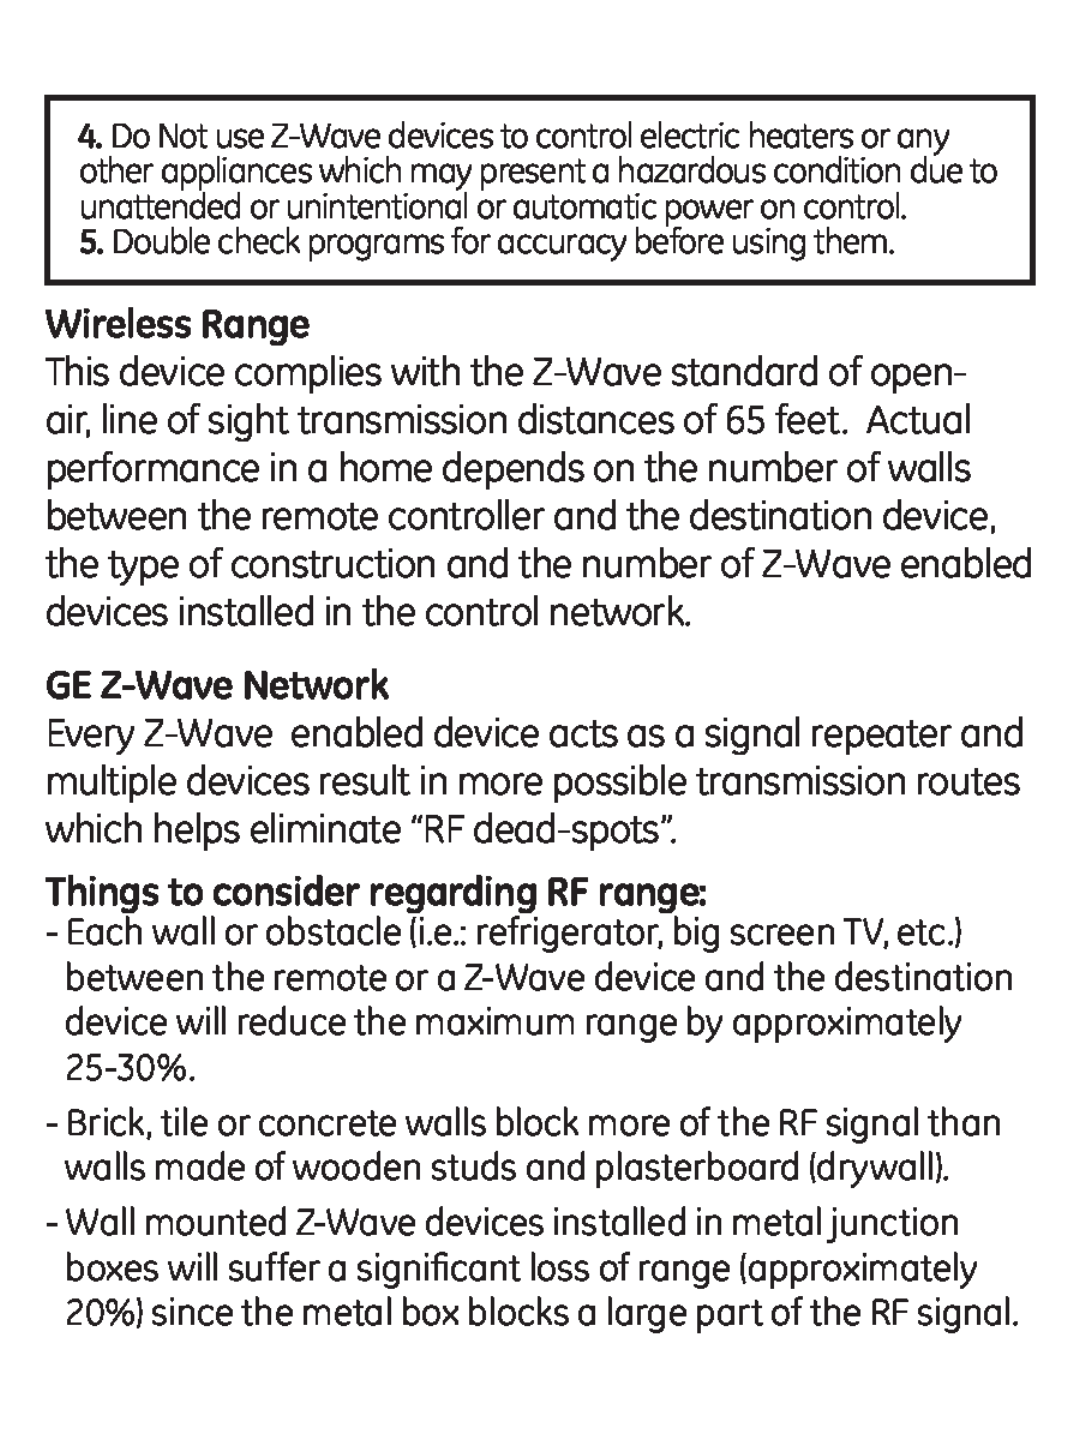 GE 45602 manual Wireless Range, GE Z-WaveNetwork, Things to consider regarding RF range 